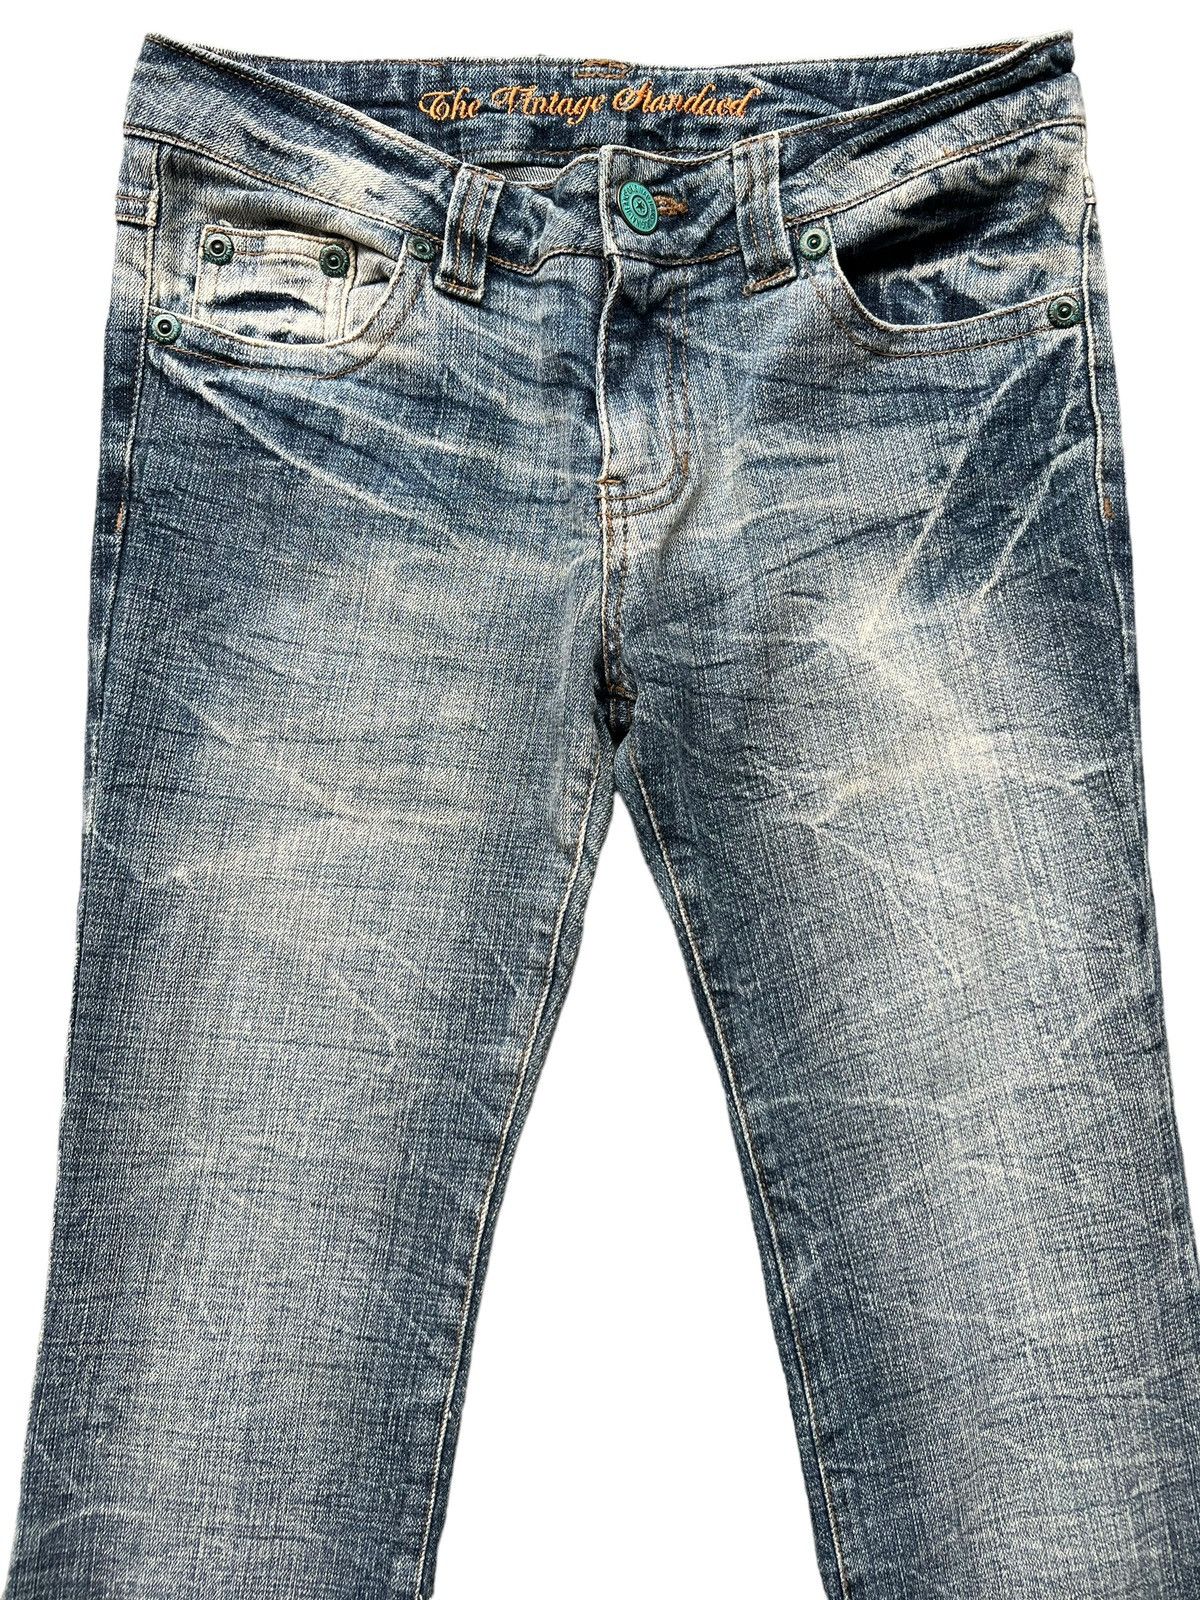 Hype - Vintage Standard Distressed Lowrise Flare Denim Jeans 29x32 - 4